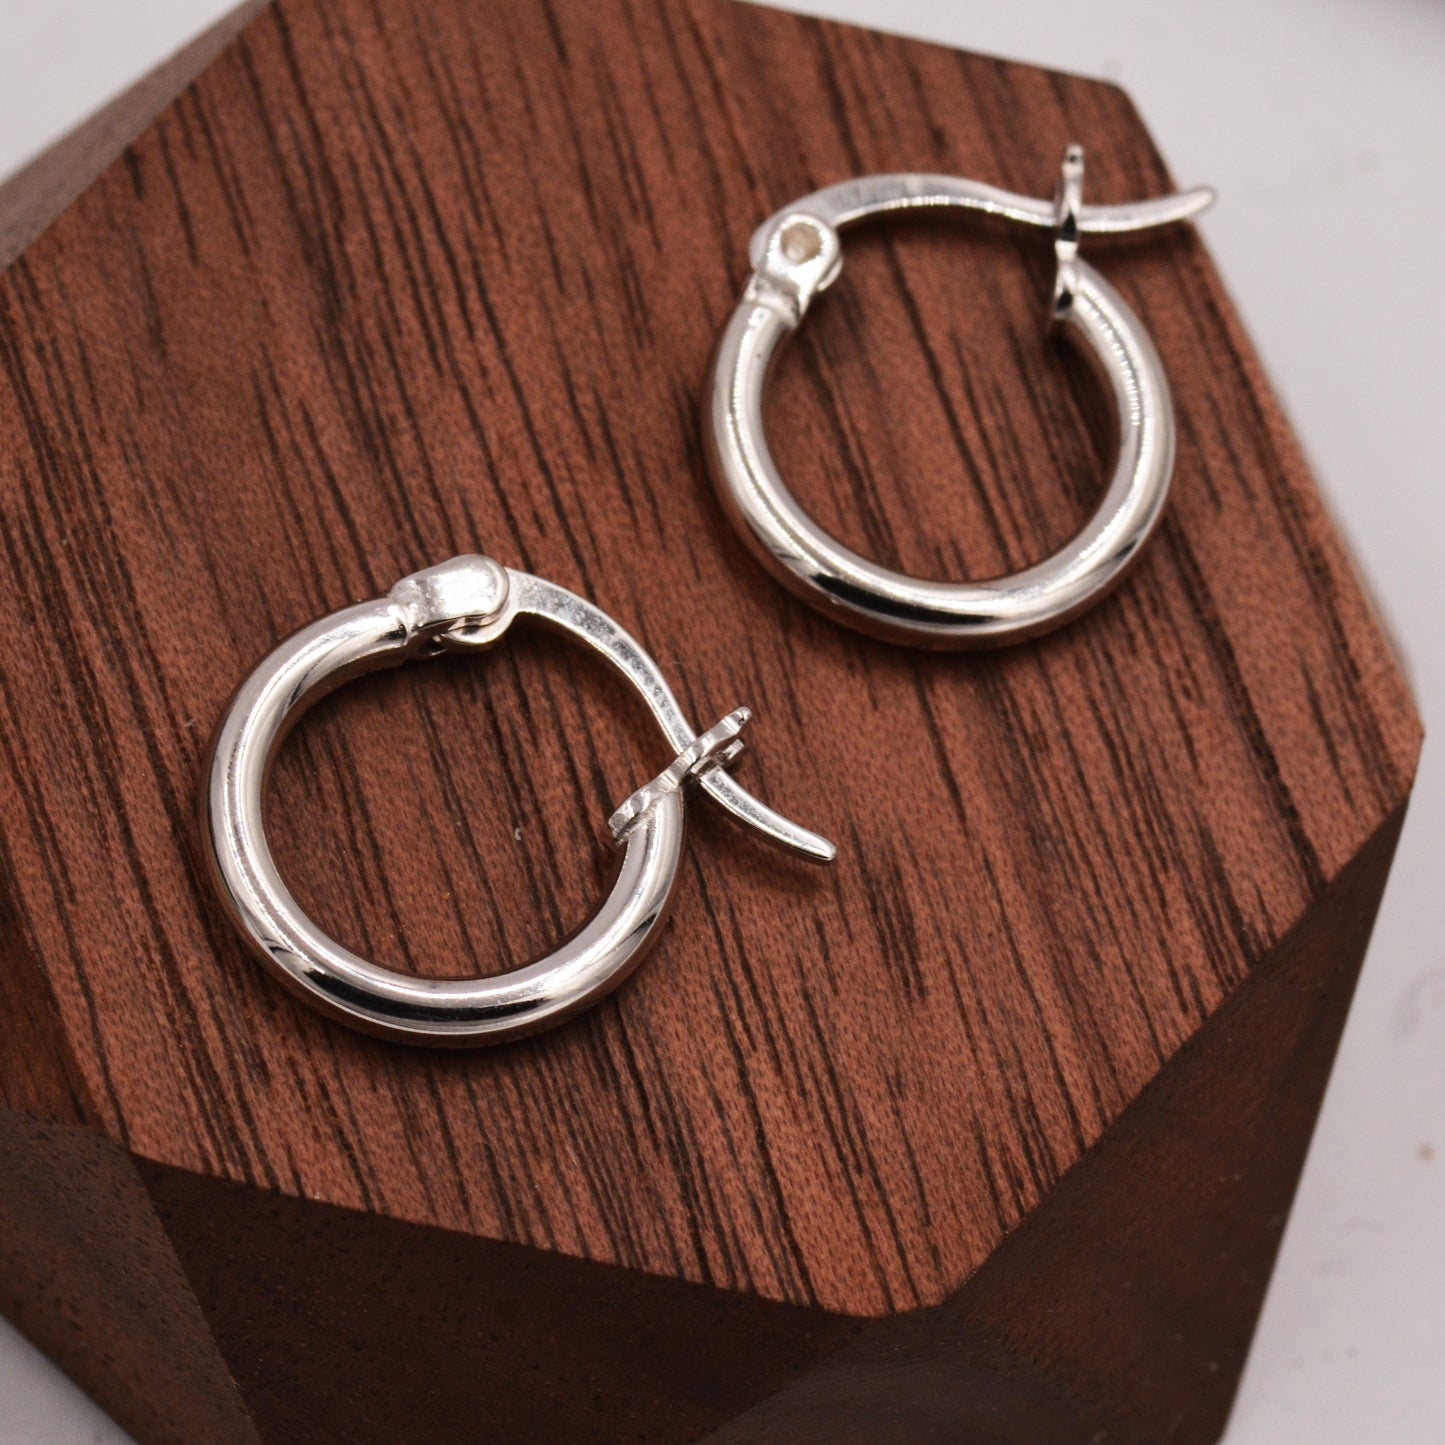 Pair of Plain Huggie Hoop Earrings in Sterling Silver with Detachable Baroque Pearl Charms,  Two Sizes Available, Simple Hoop Earrings